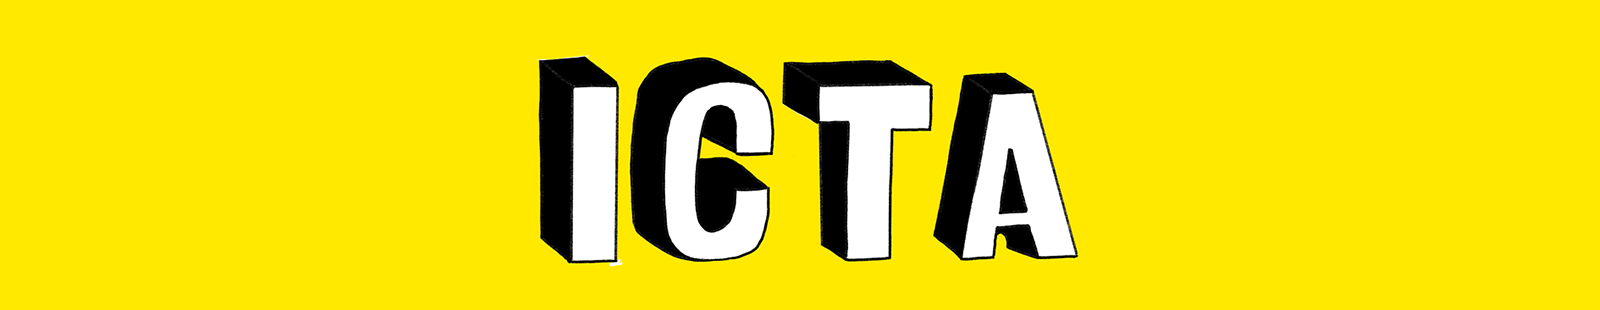 ICTA logo yellow